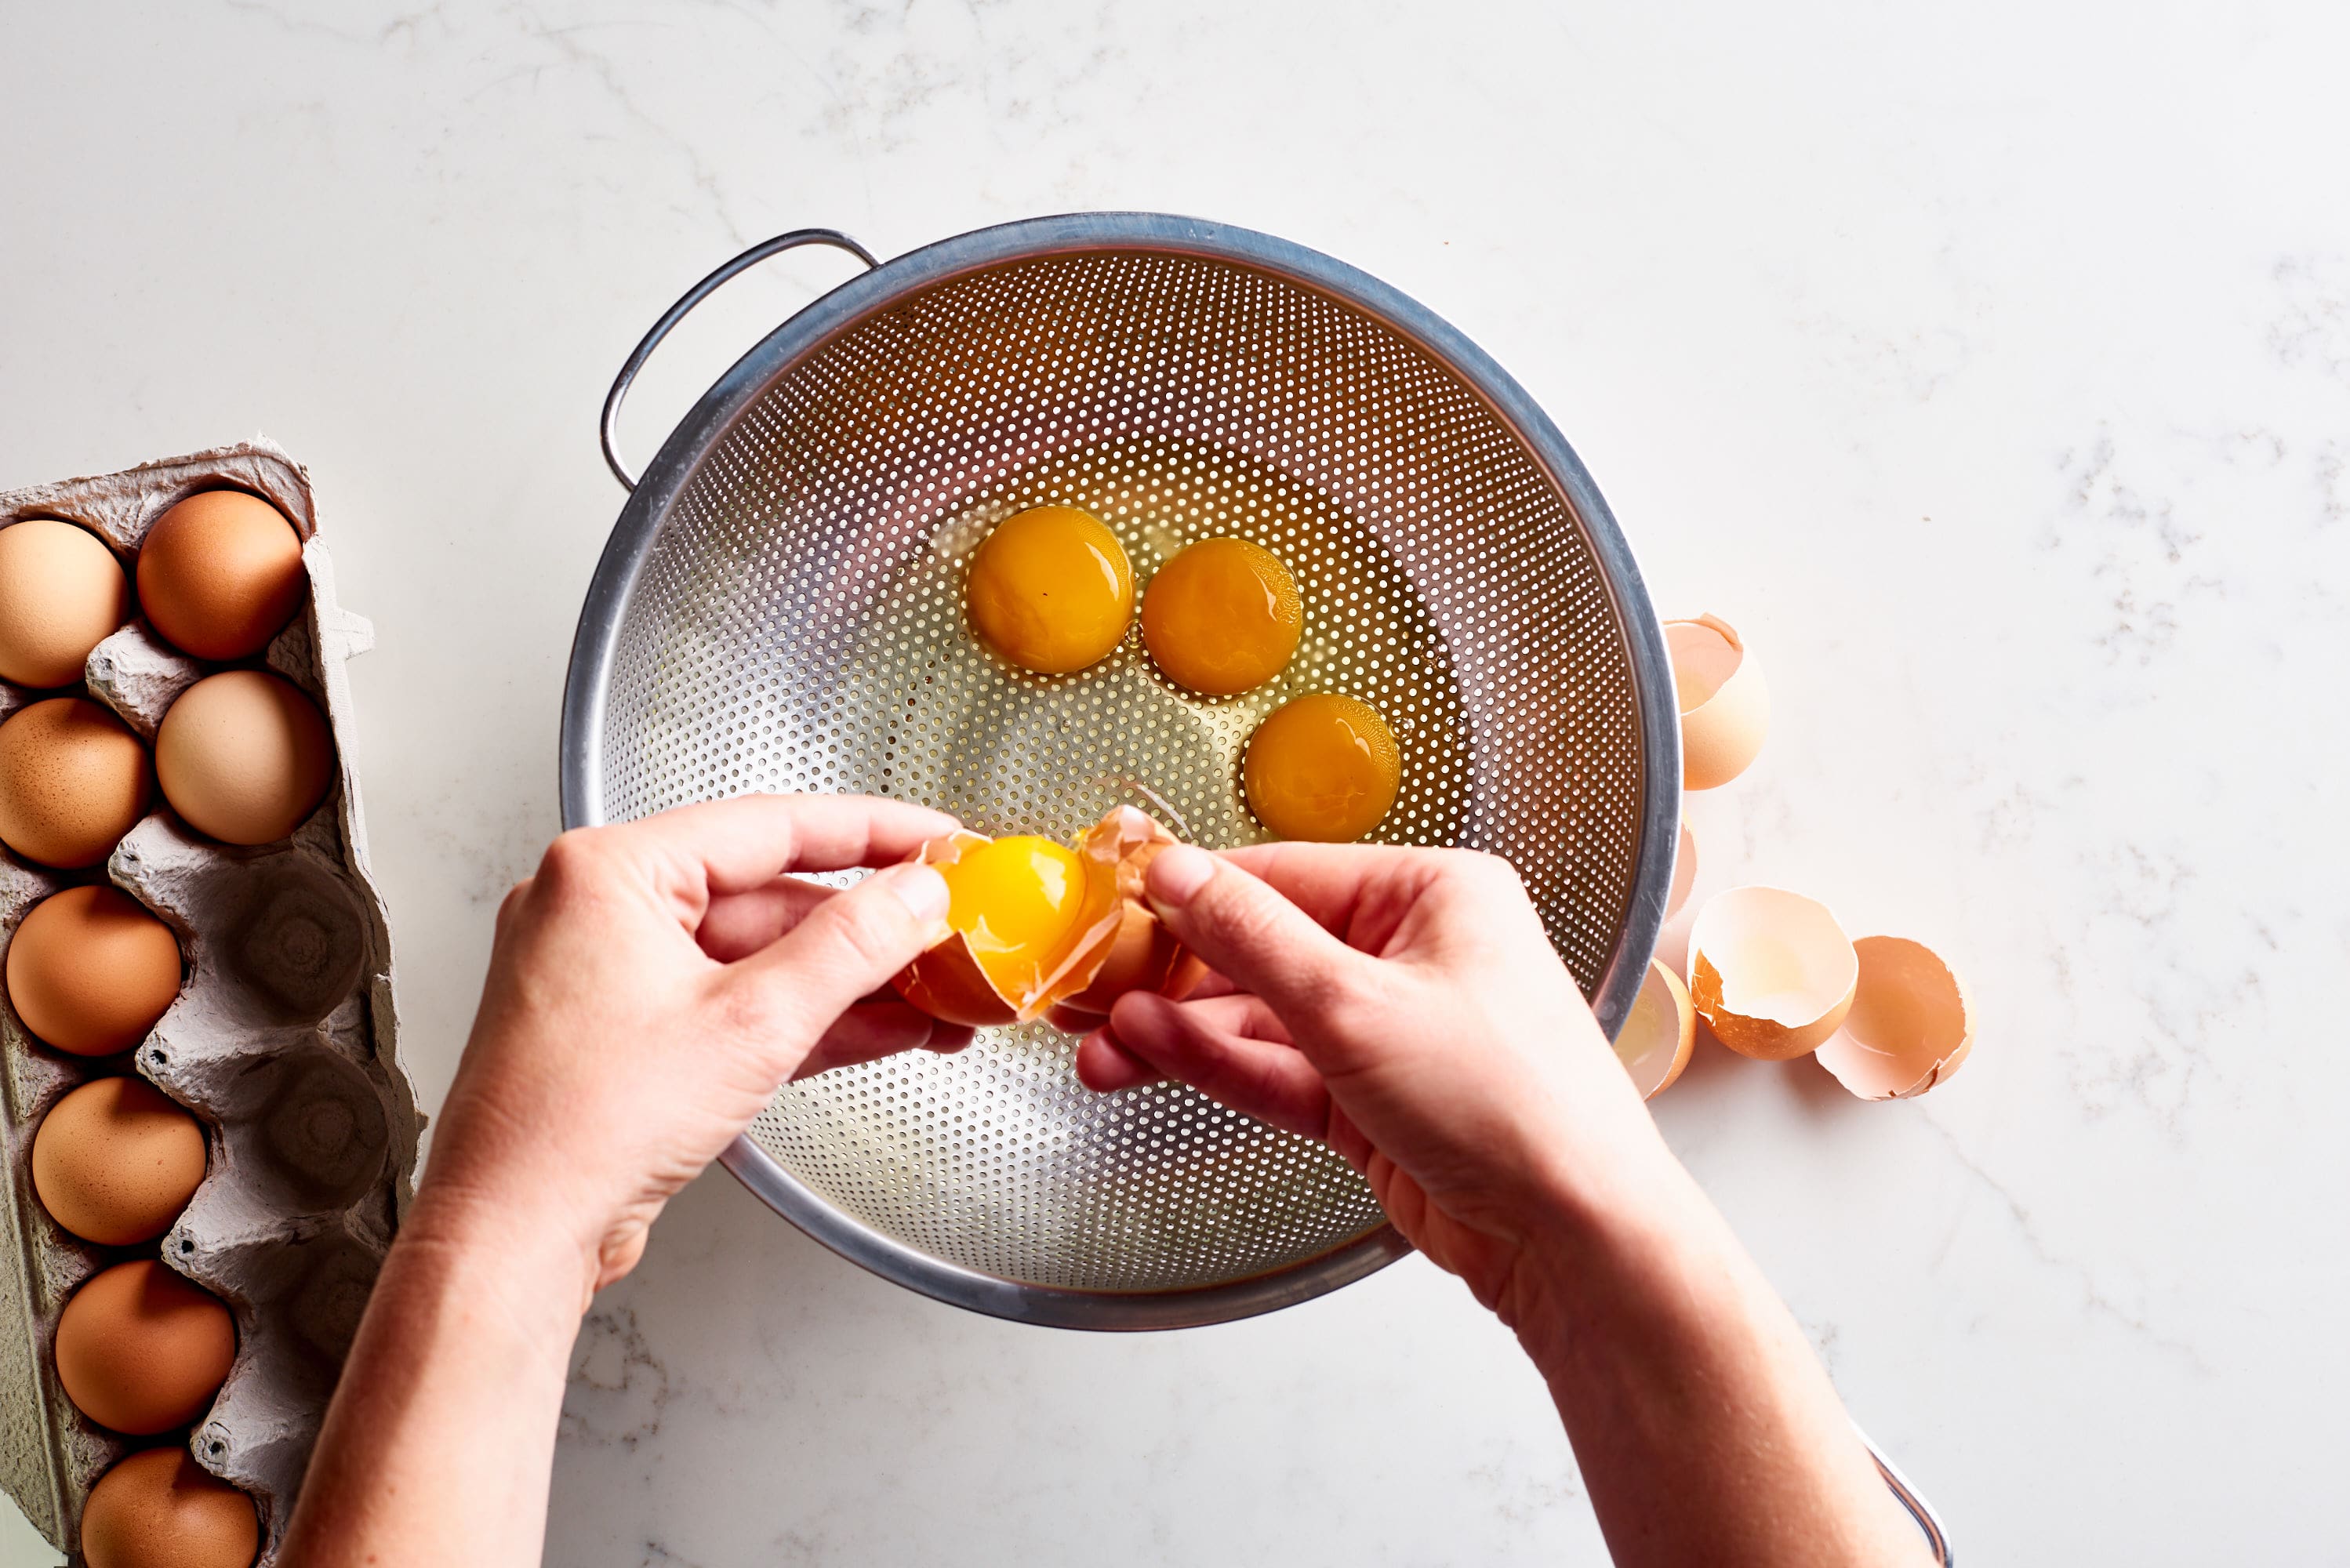 https://cdn.apartmenttherapy.info/image/upload/v1569006601/k/Photo/Series/2019-10-skills-battle-poached-eggs/Skill-Battle_Poached-Eggs_033.jpg